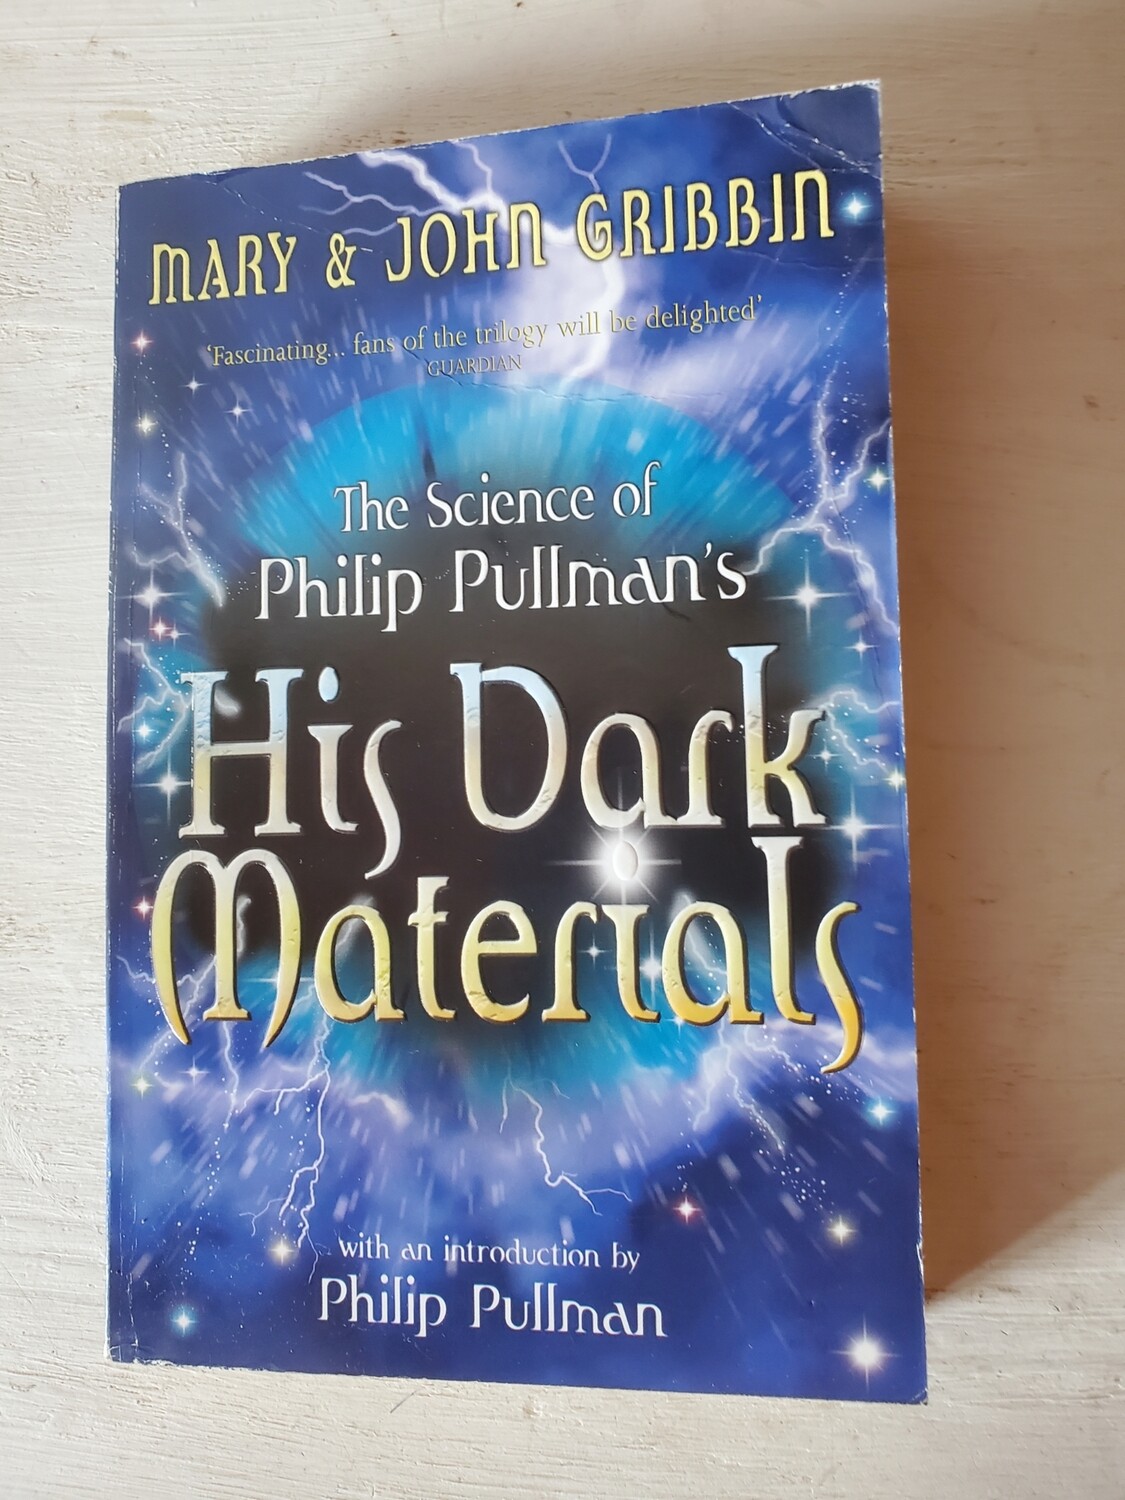 The Science of Philip Pullman's His Dark Materials, Mary & John Gribbin